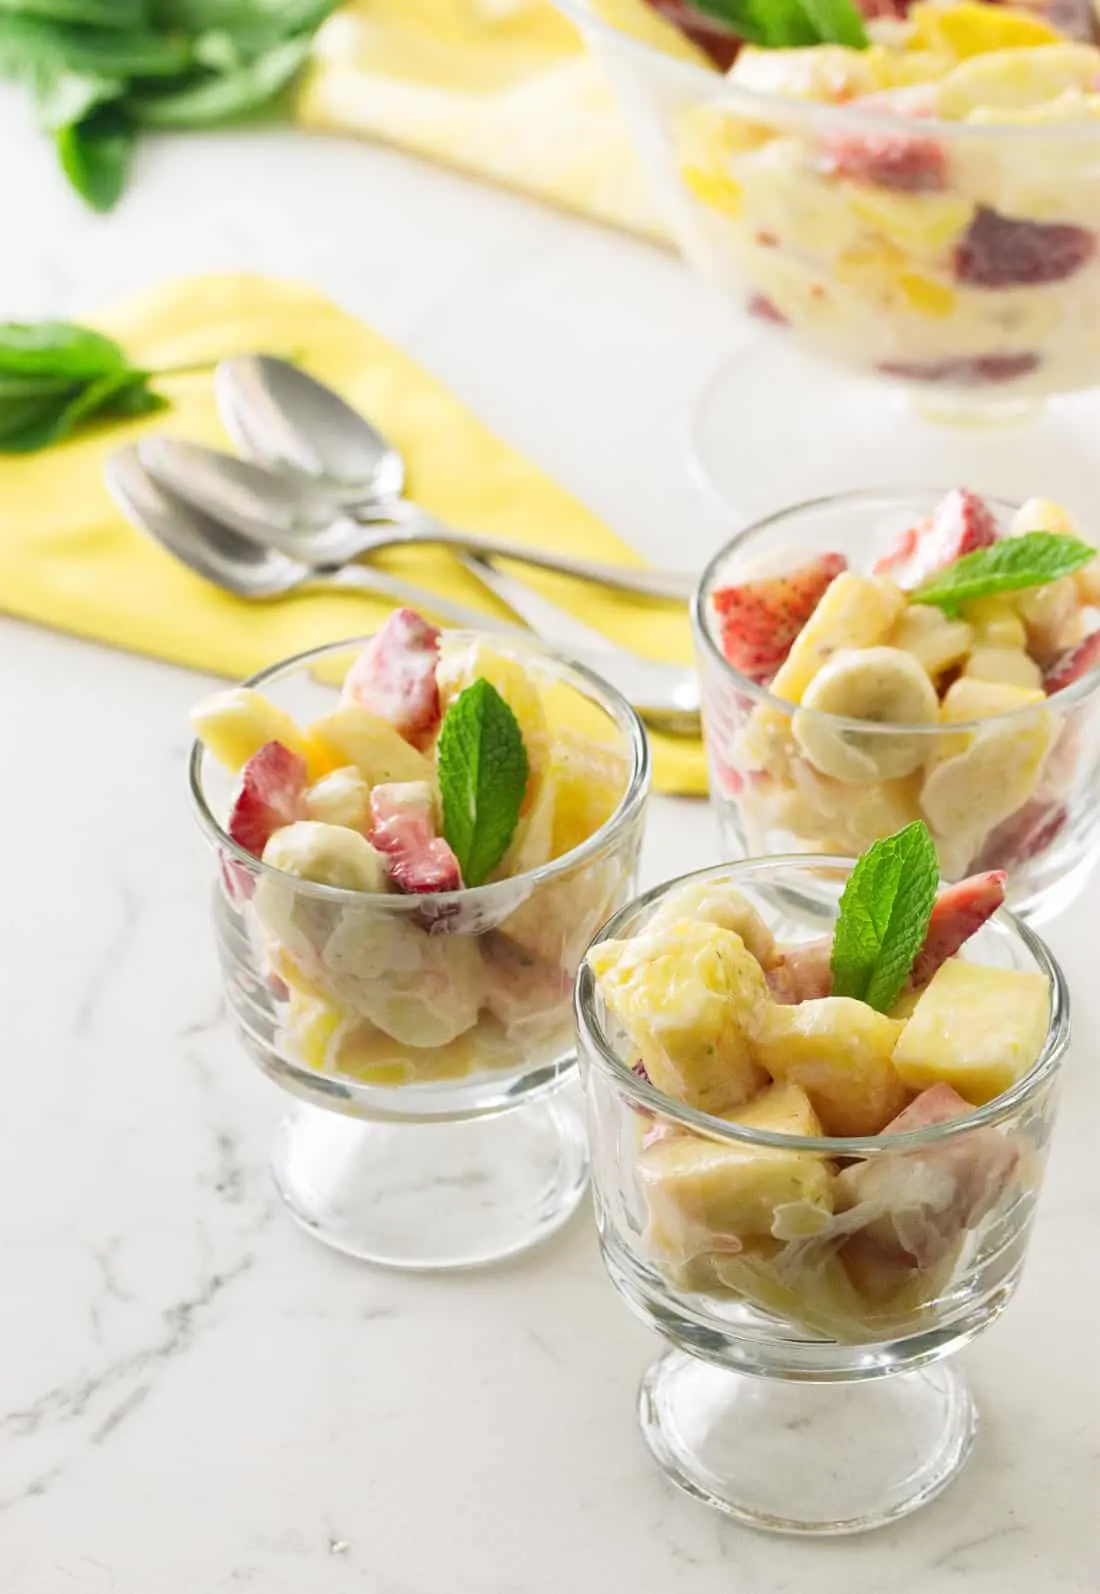 Tropical Fruit salad with honey yogurt dressing